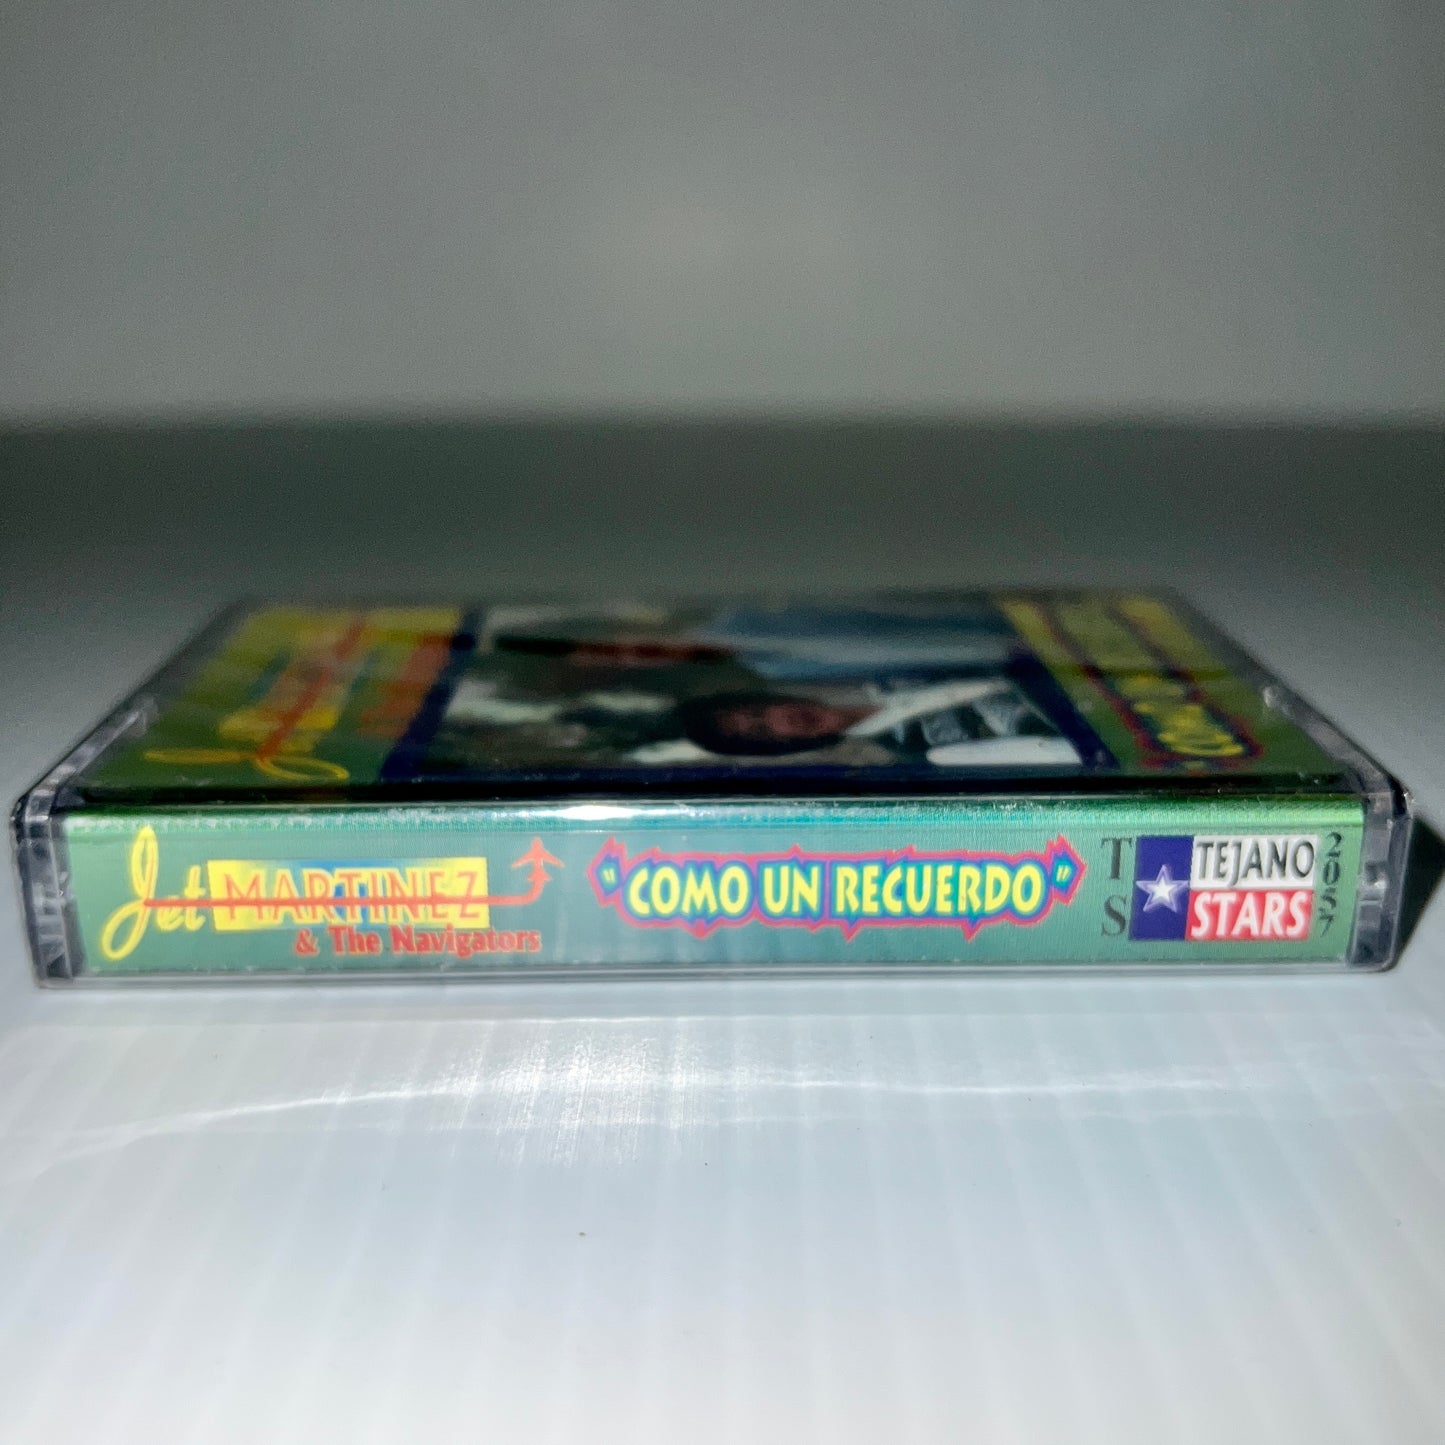 Jet Martinez & The Navigators - Como Un Recuerdo (Cassette)